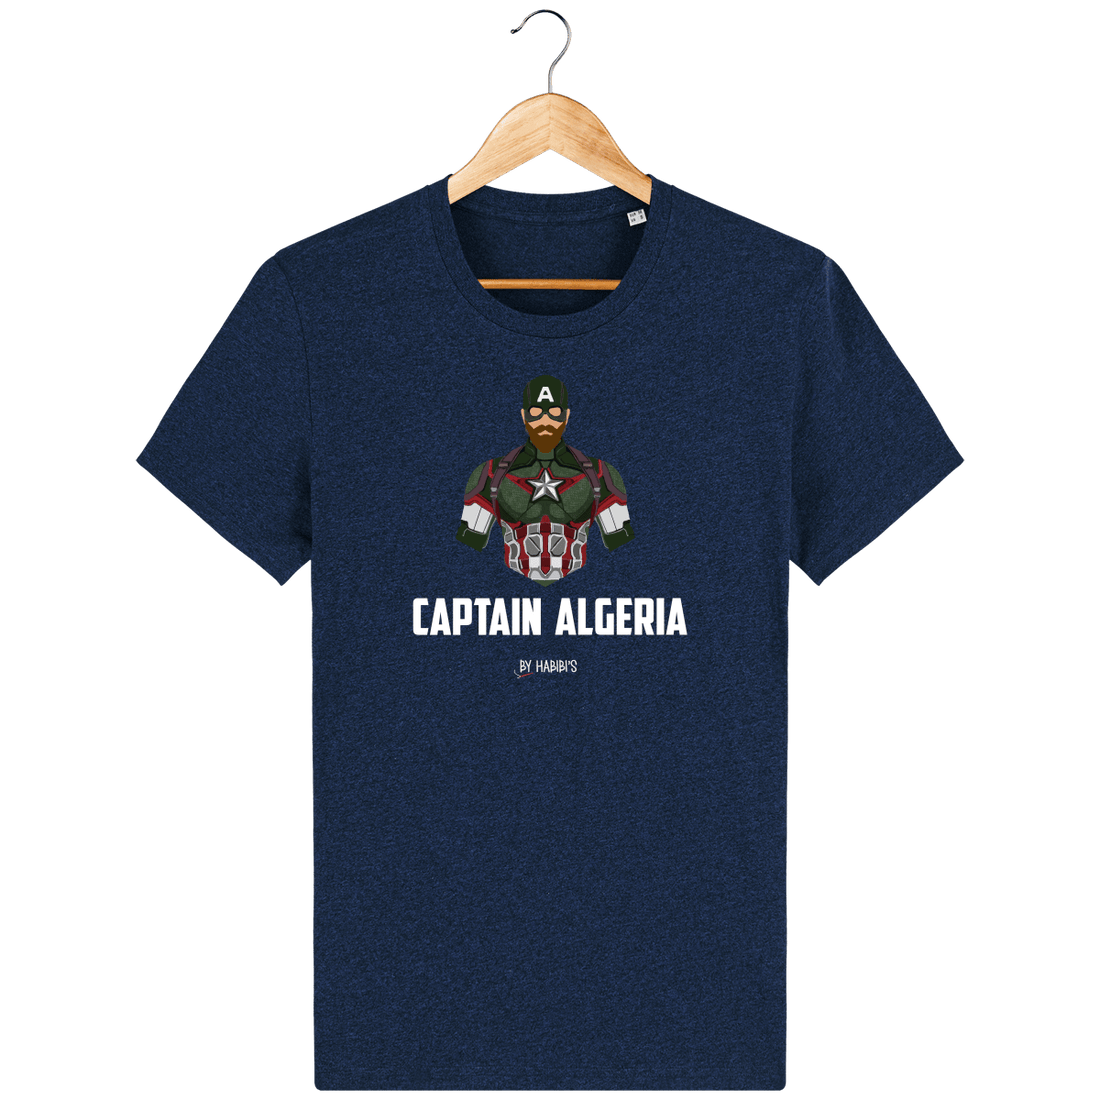 Unisexe>Tee-shirts - Tee Shirt Homme Captain Algeria